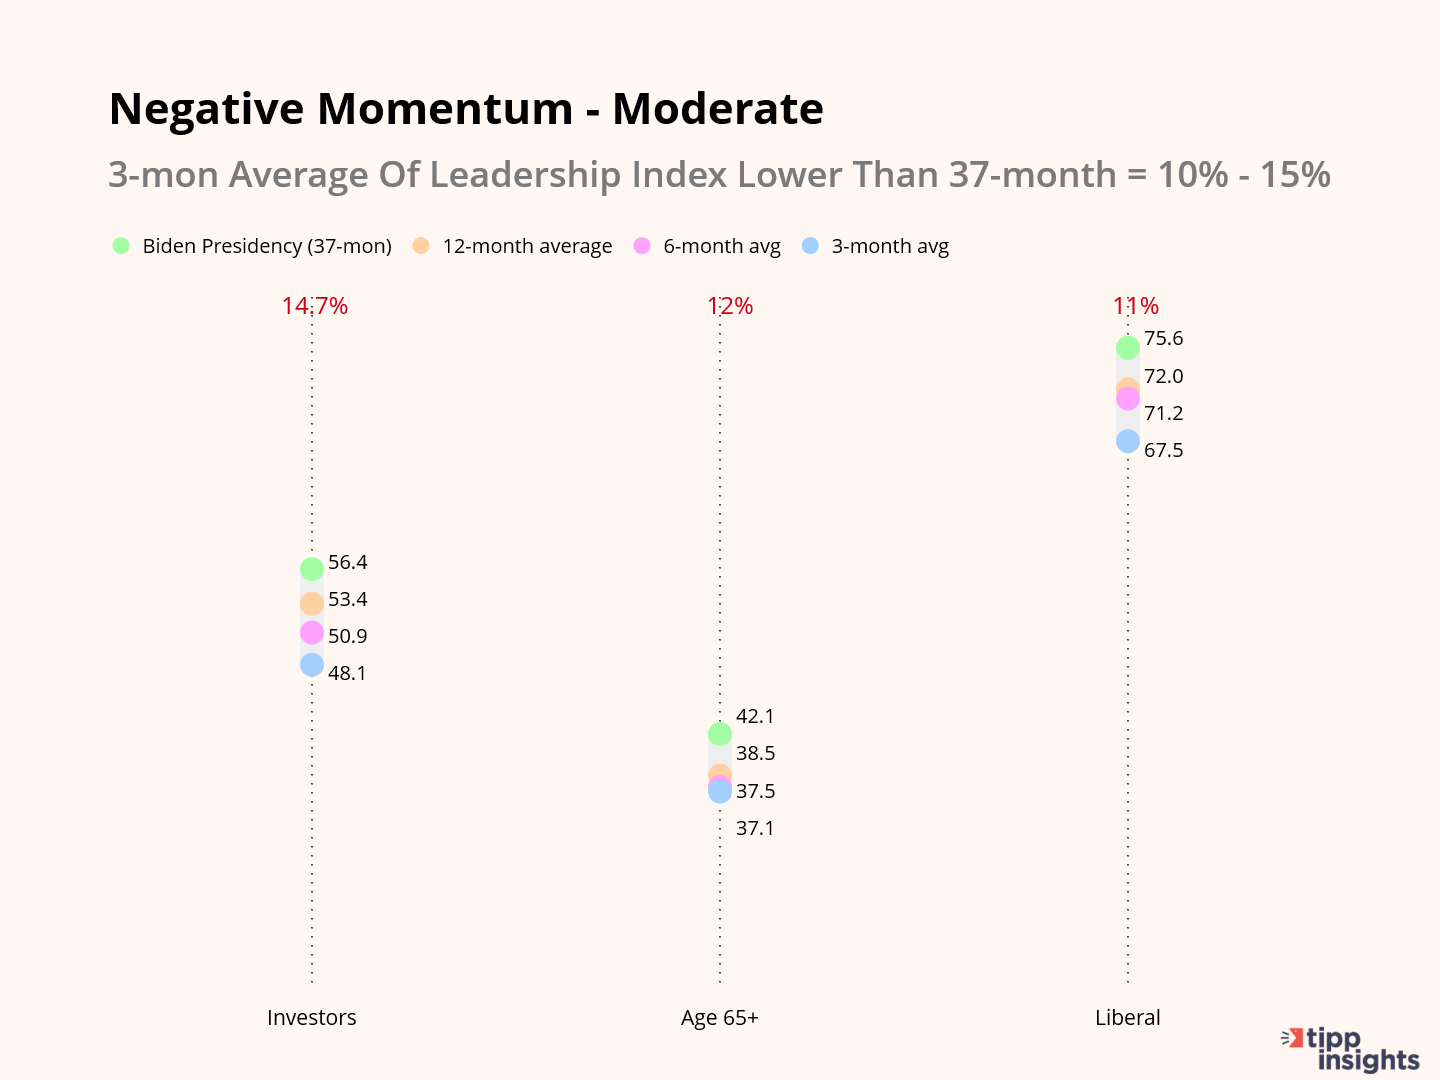 Biden's Negative Momentum Metastasizes Among Key Demographics, Challenging Reelection Prospects